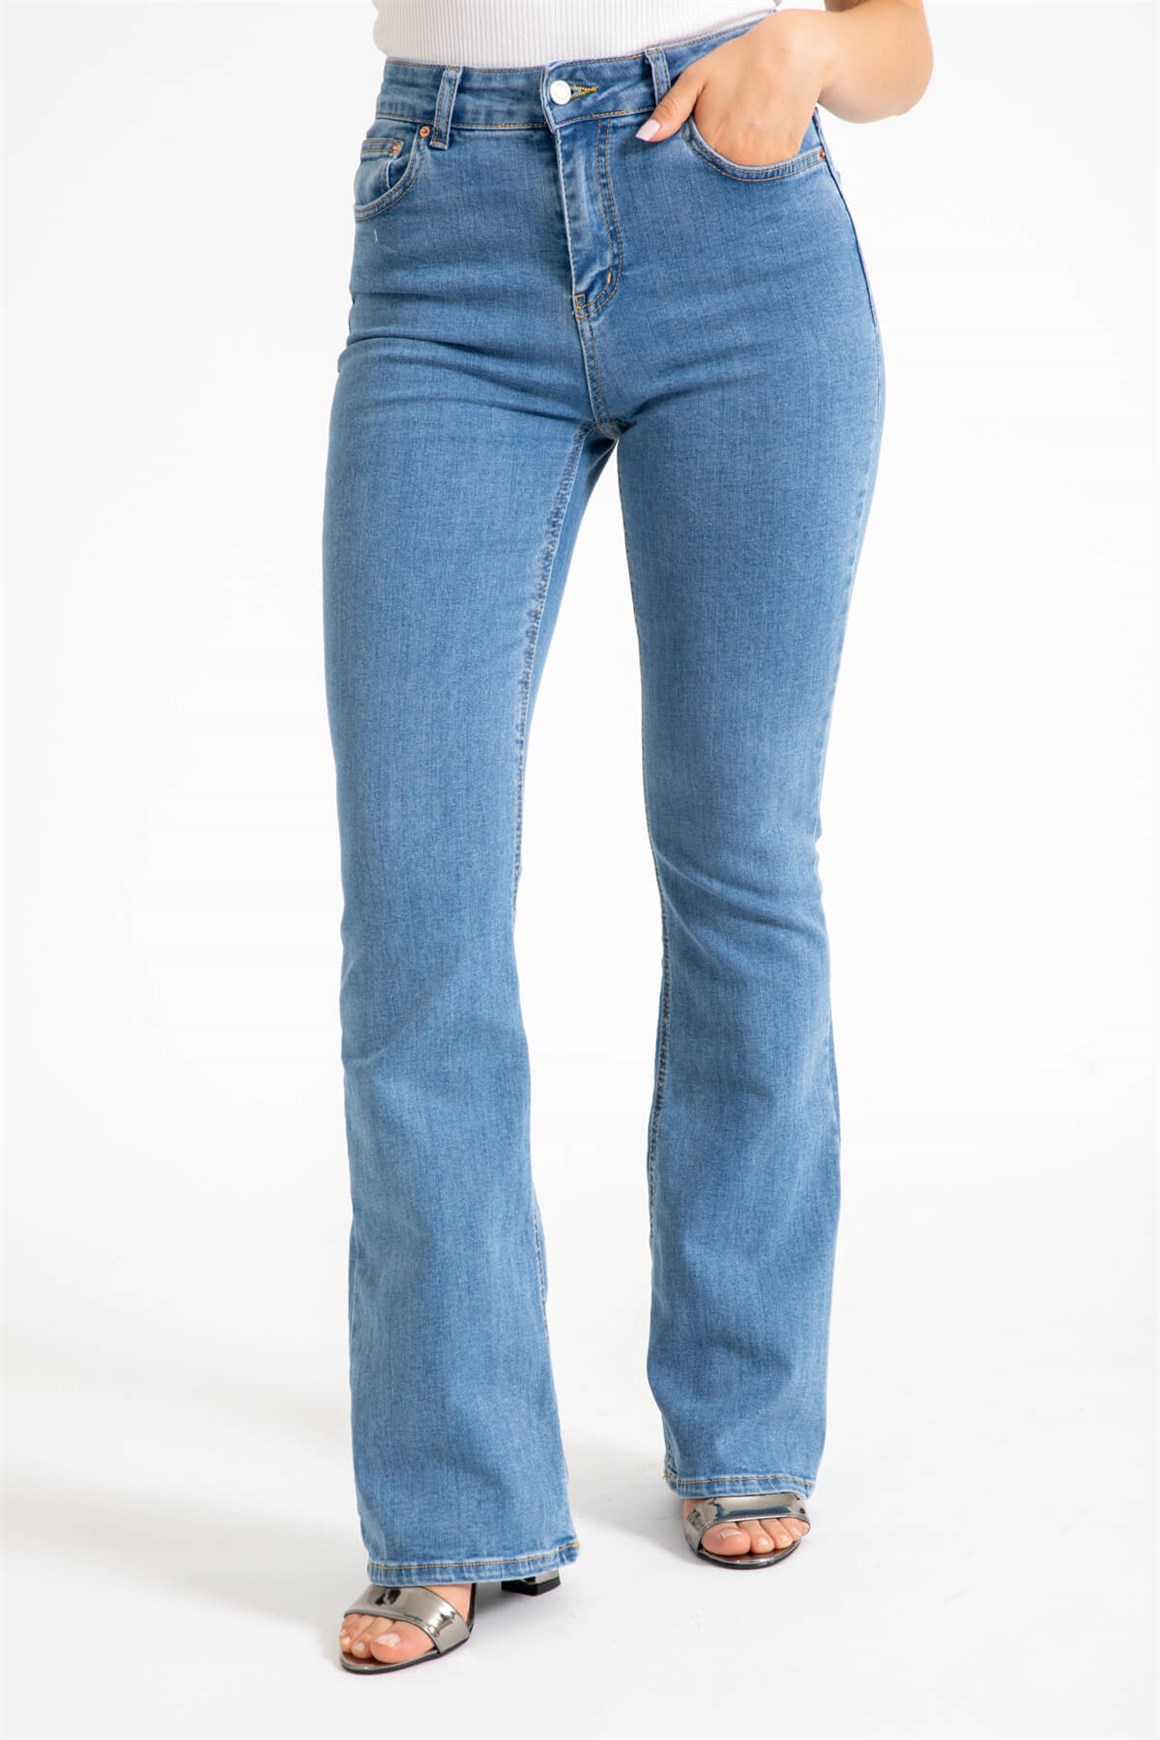 Spanish Cut Women's Jeans - Blue